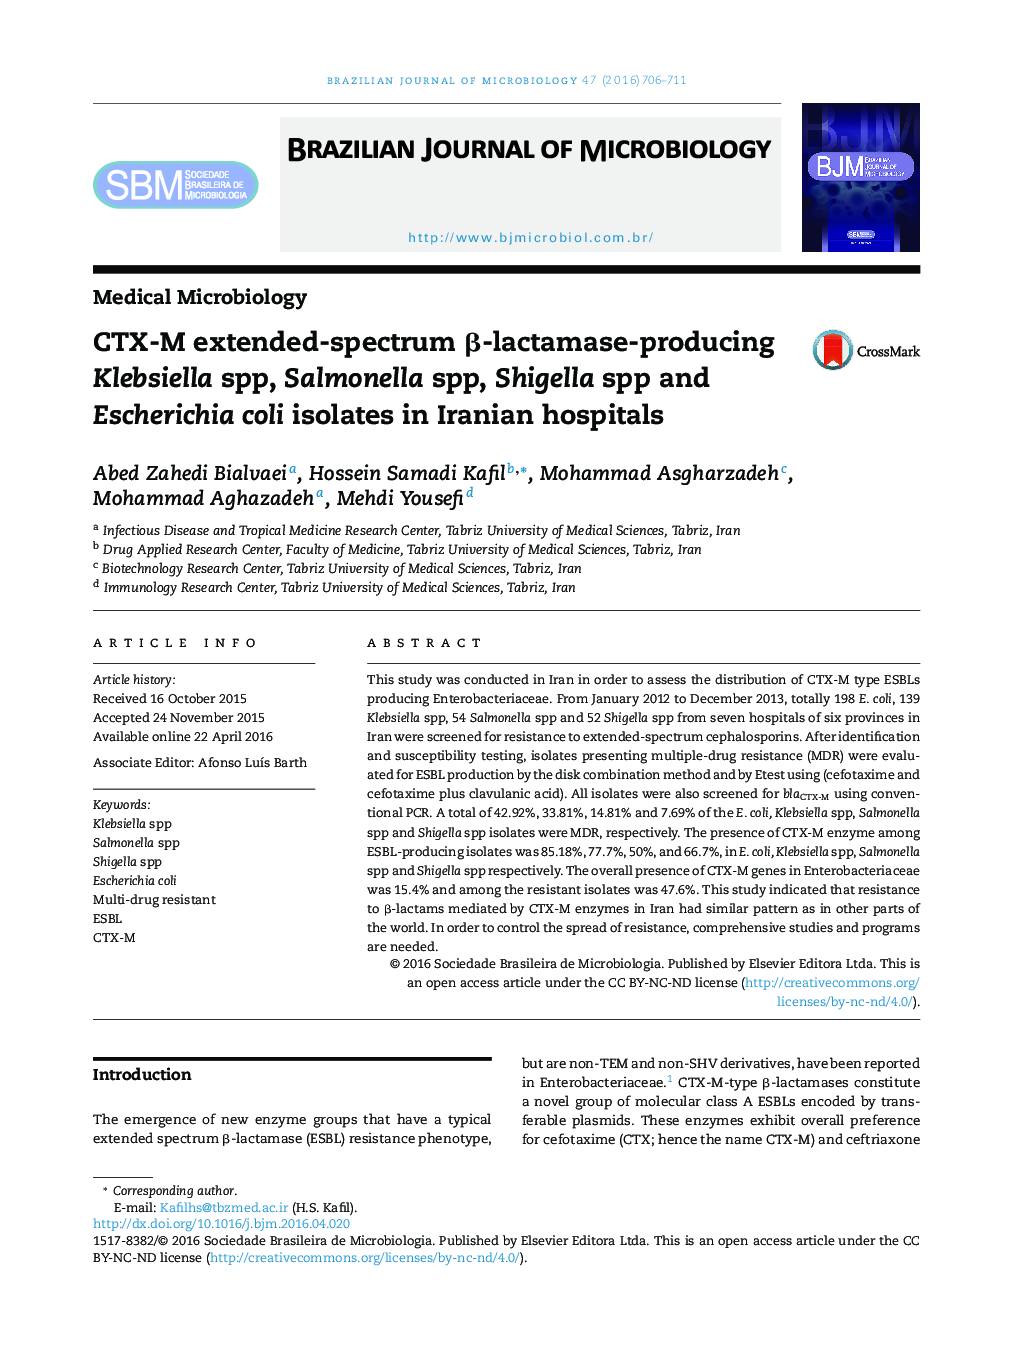 CTX-M extended-spectrum β-lactamase-producing Klebsiella spp, Salmonella spp, Shigella spp and Escherichia coli isolates in Iranian hospitals